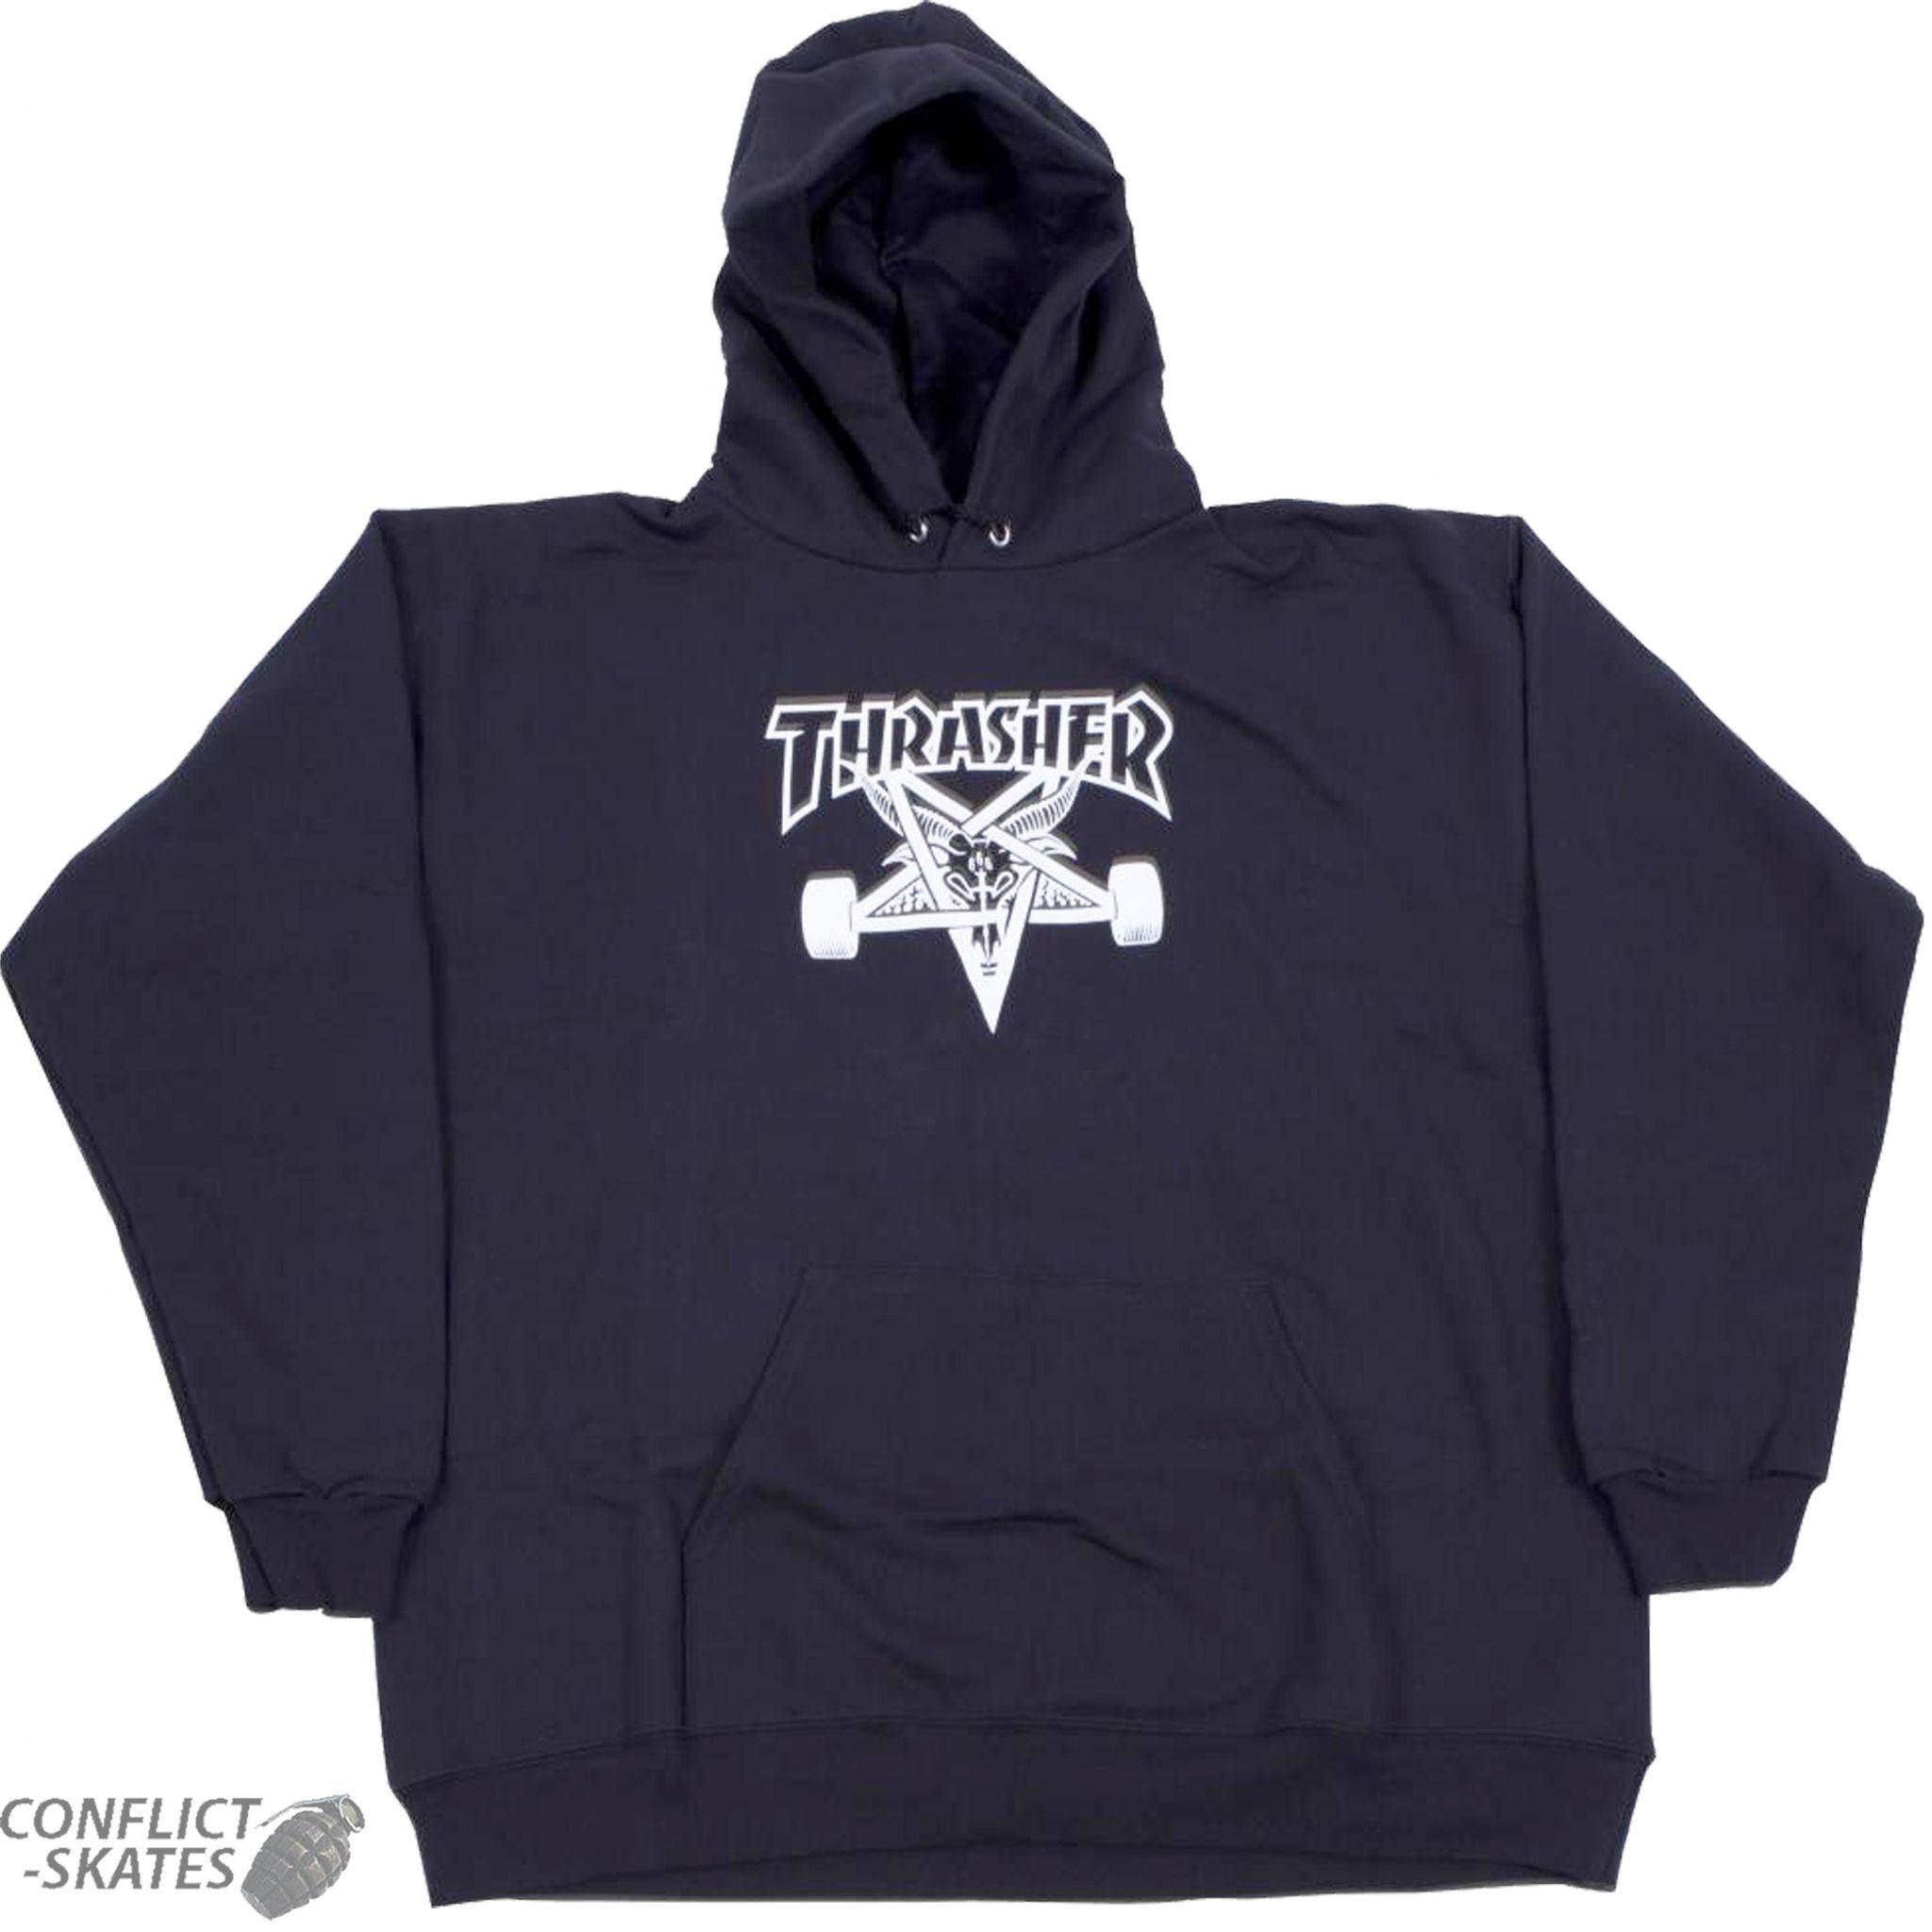 Small Thrasher Goat Logo - THRASHER Skate Goat punk Skateboard Hood Sweatshirt Black S M L XL